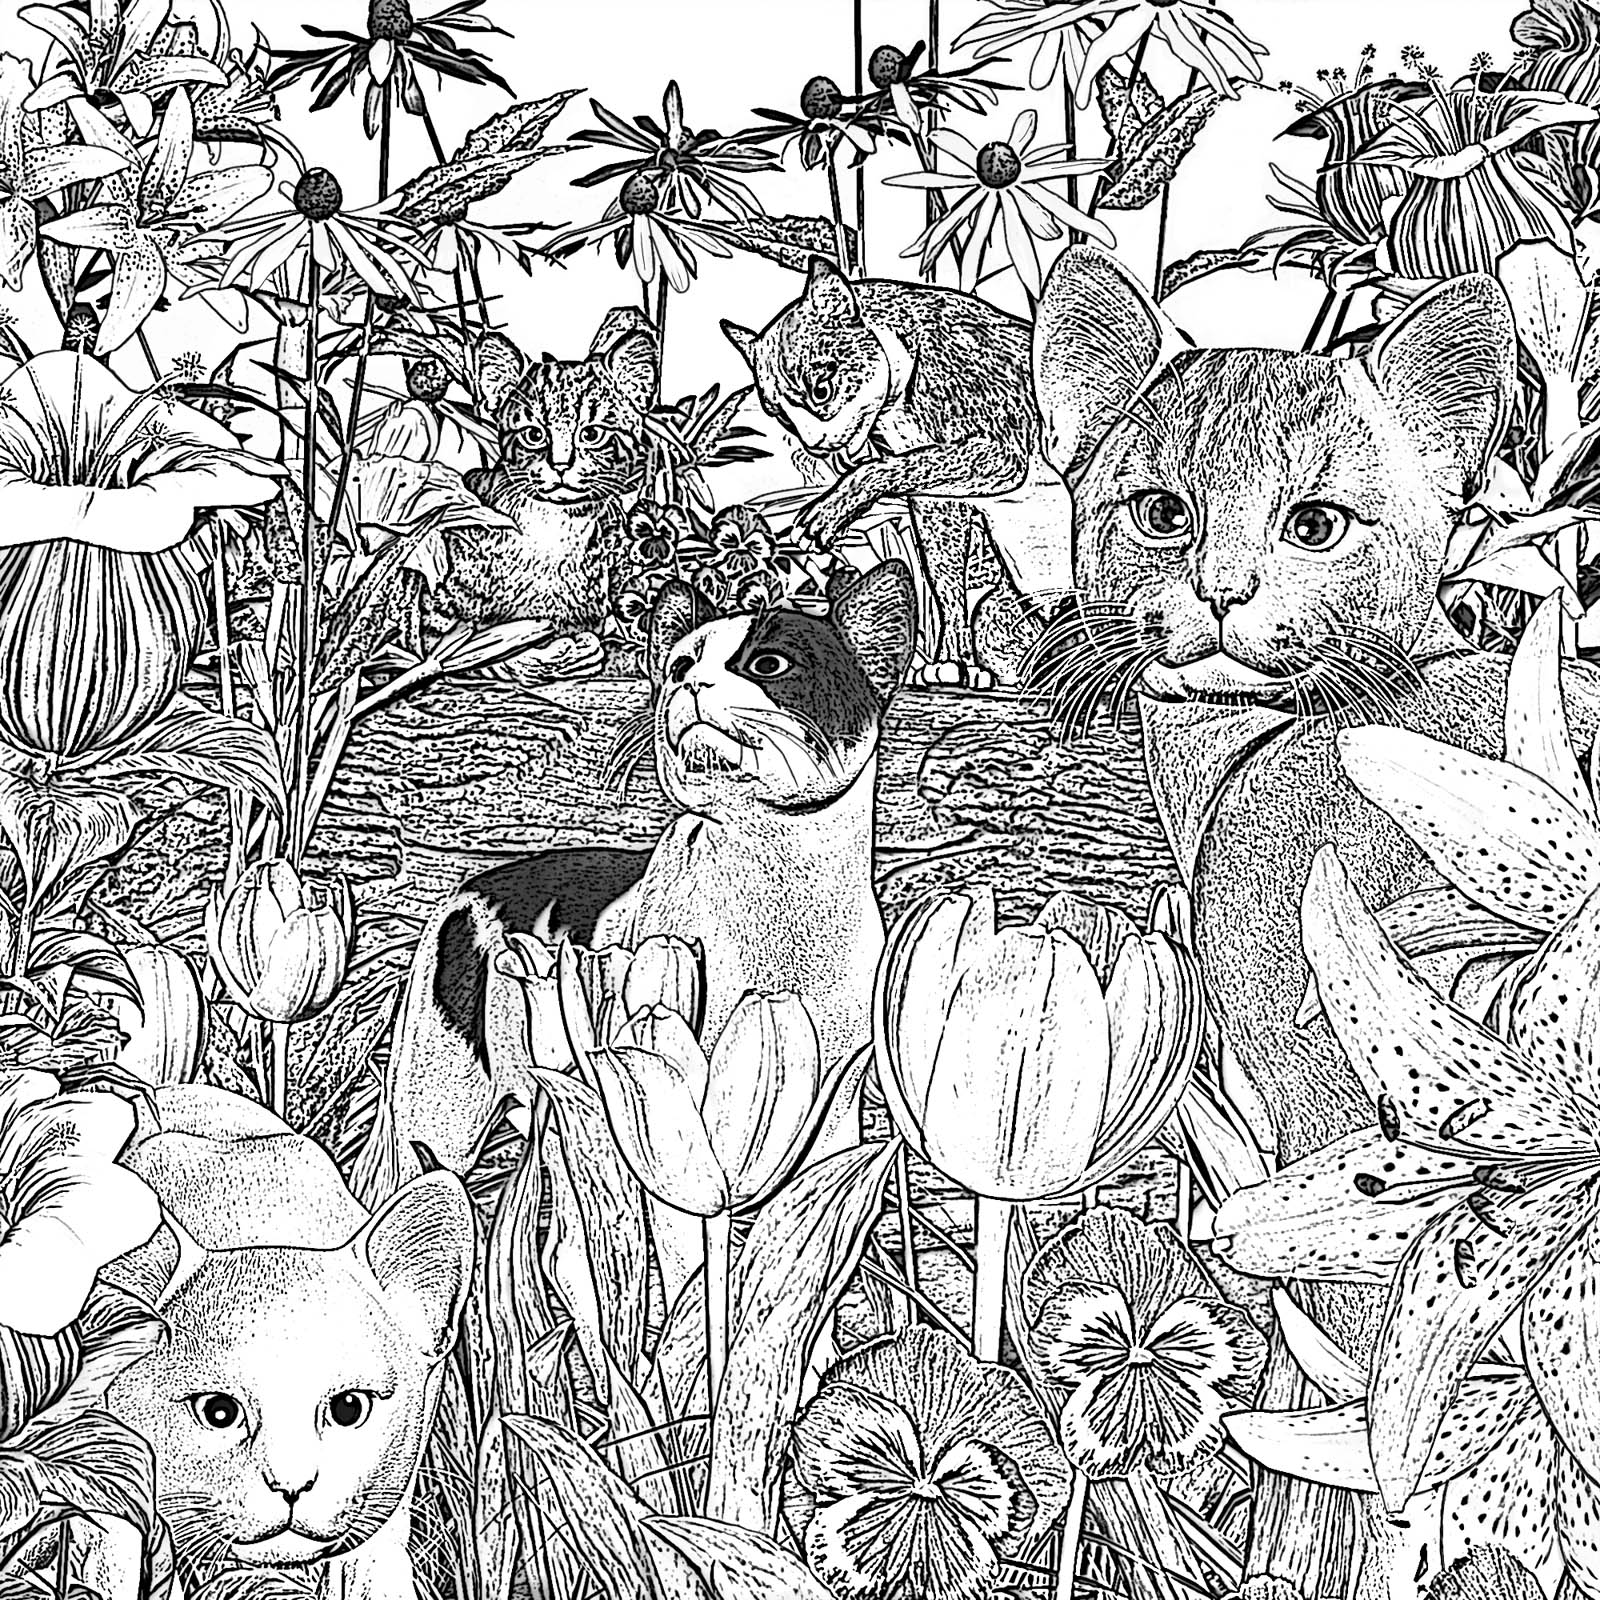 Flower Cats by Wildlyfe